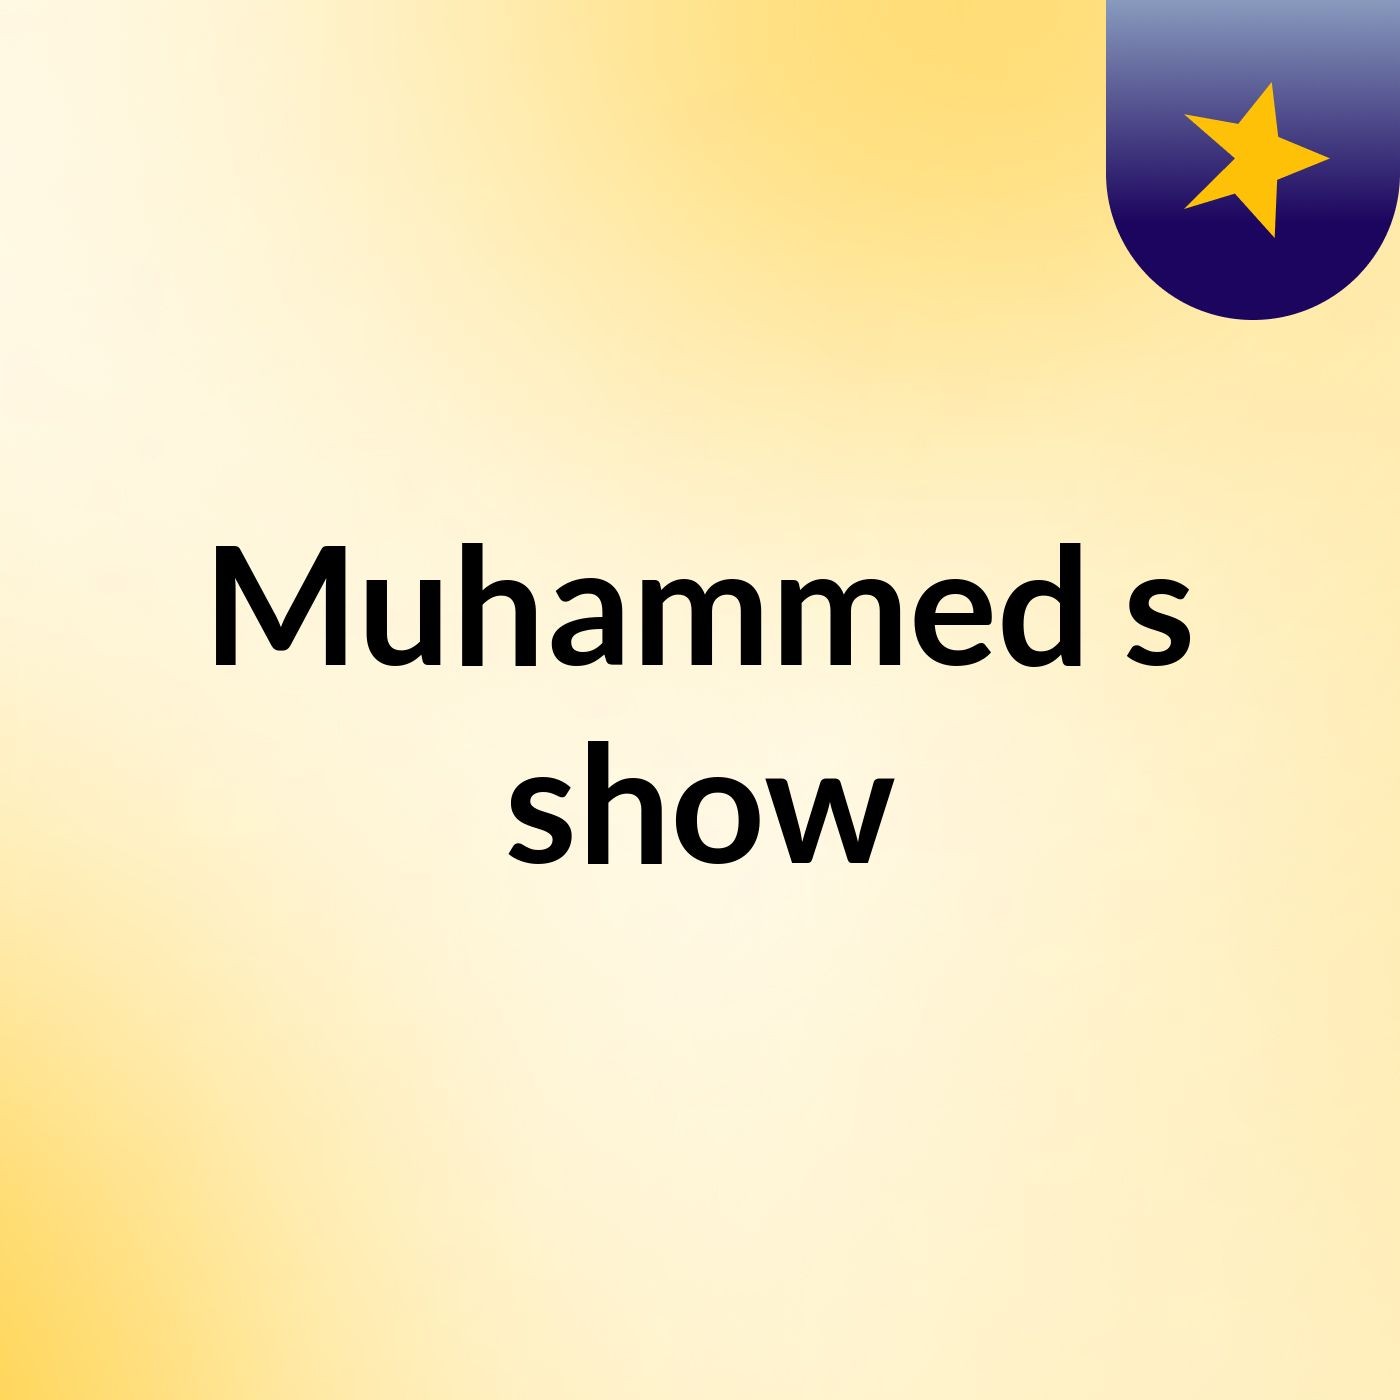 Muhammed's show